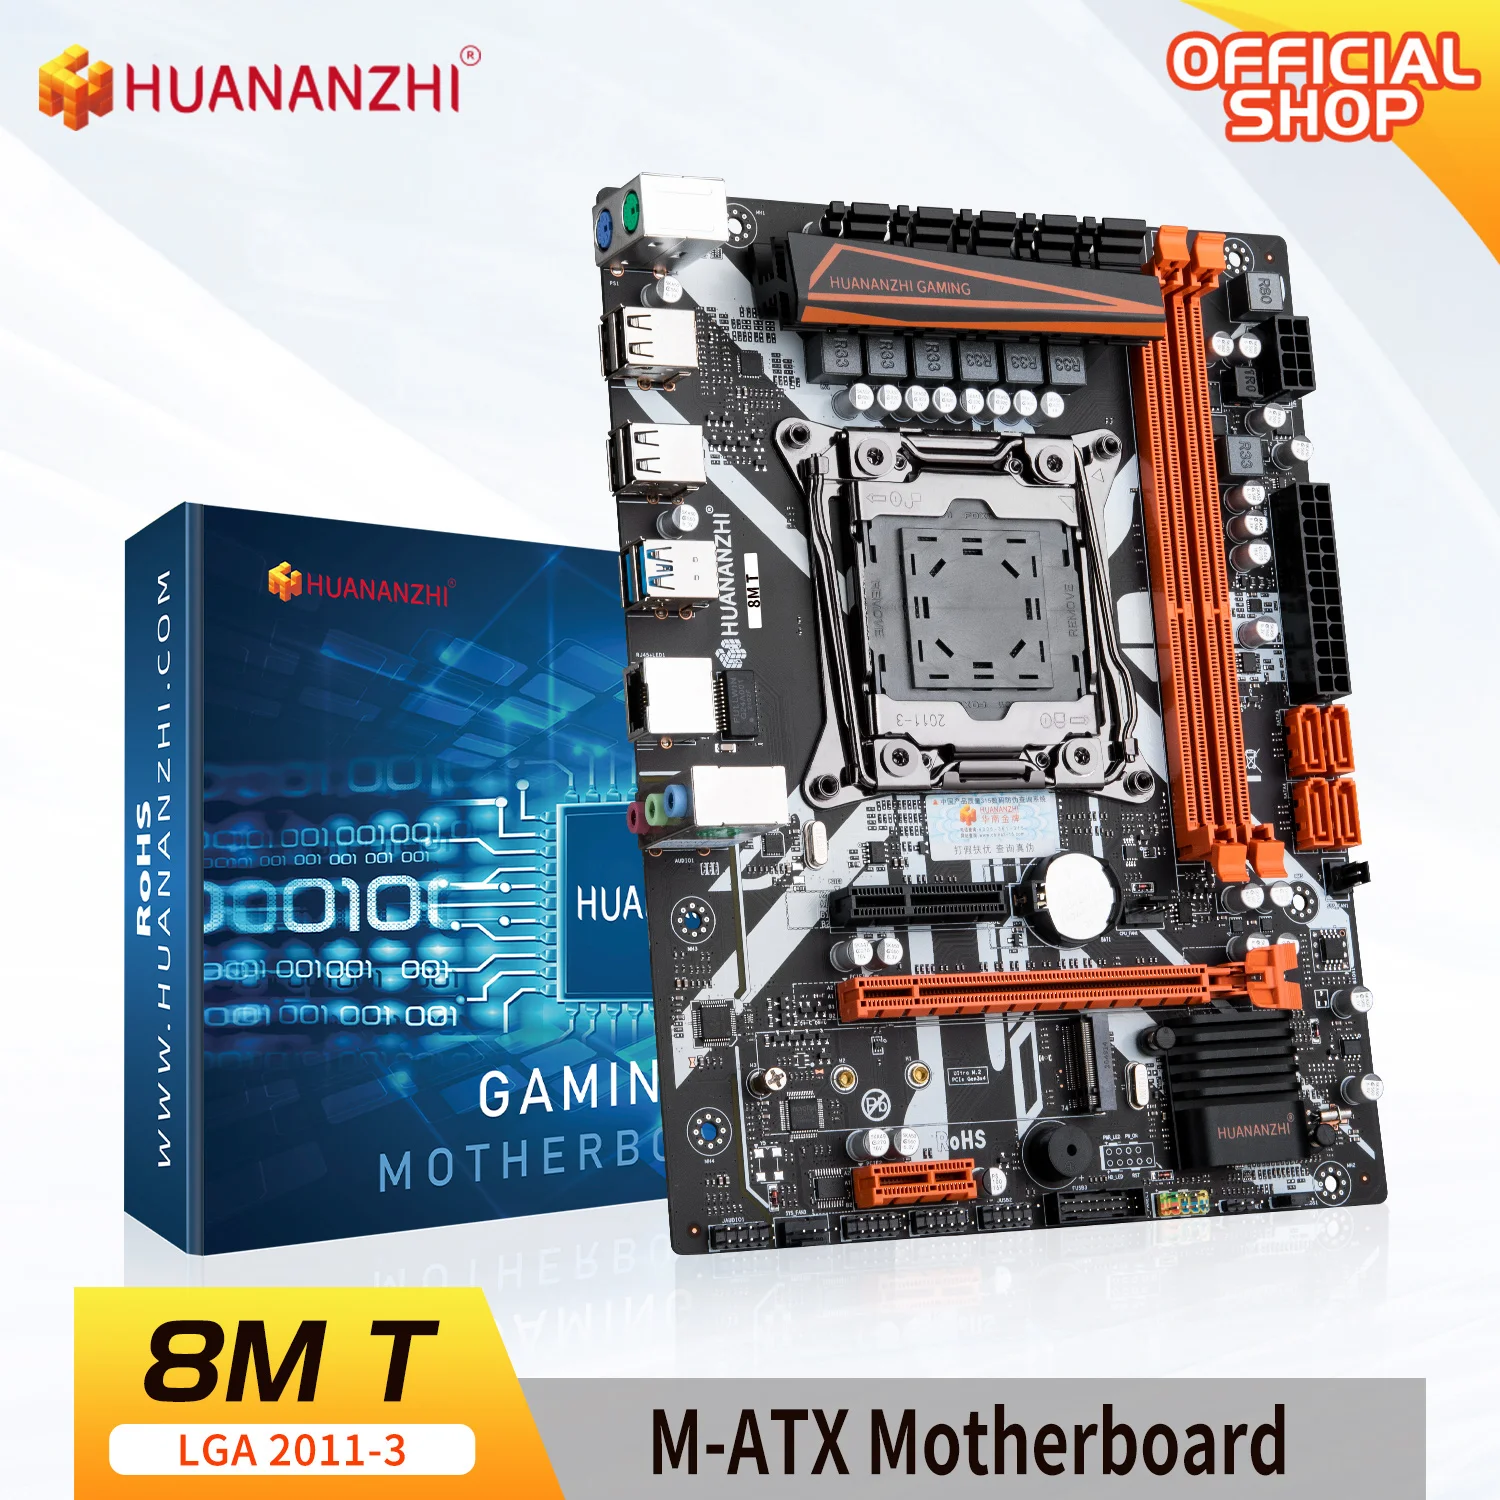 

HUANANZHI X99 8M T LGA 2011-3 XEON X99 Motherboard support Intel E5 2696 2678 2676 2673 2666 V3 DDR3 RECC NON-ECC memory NVME